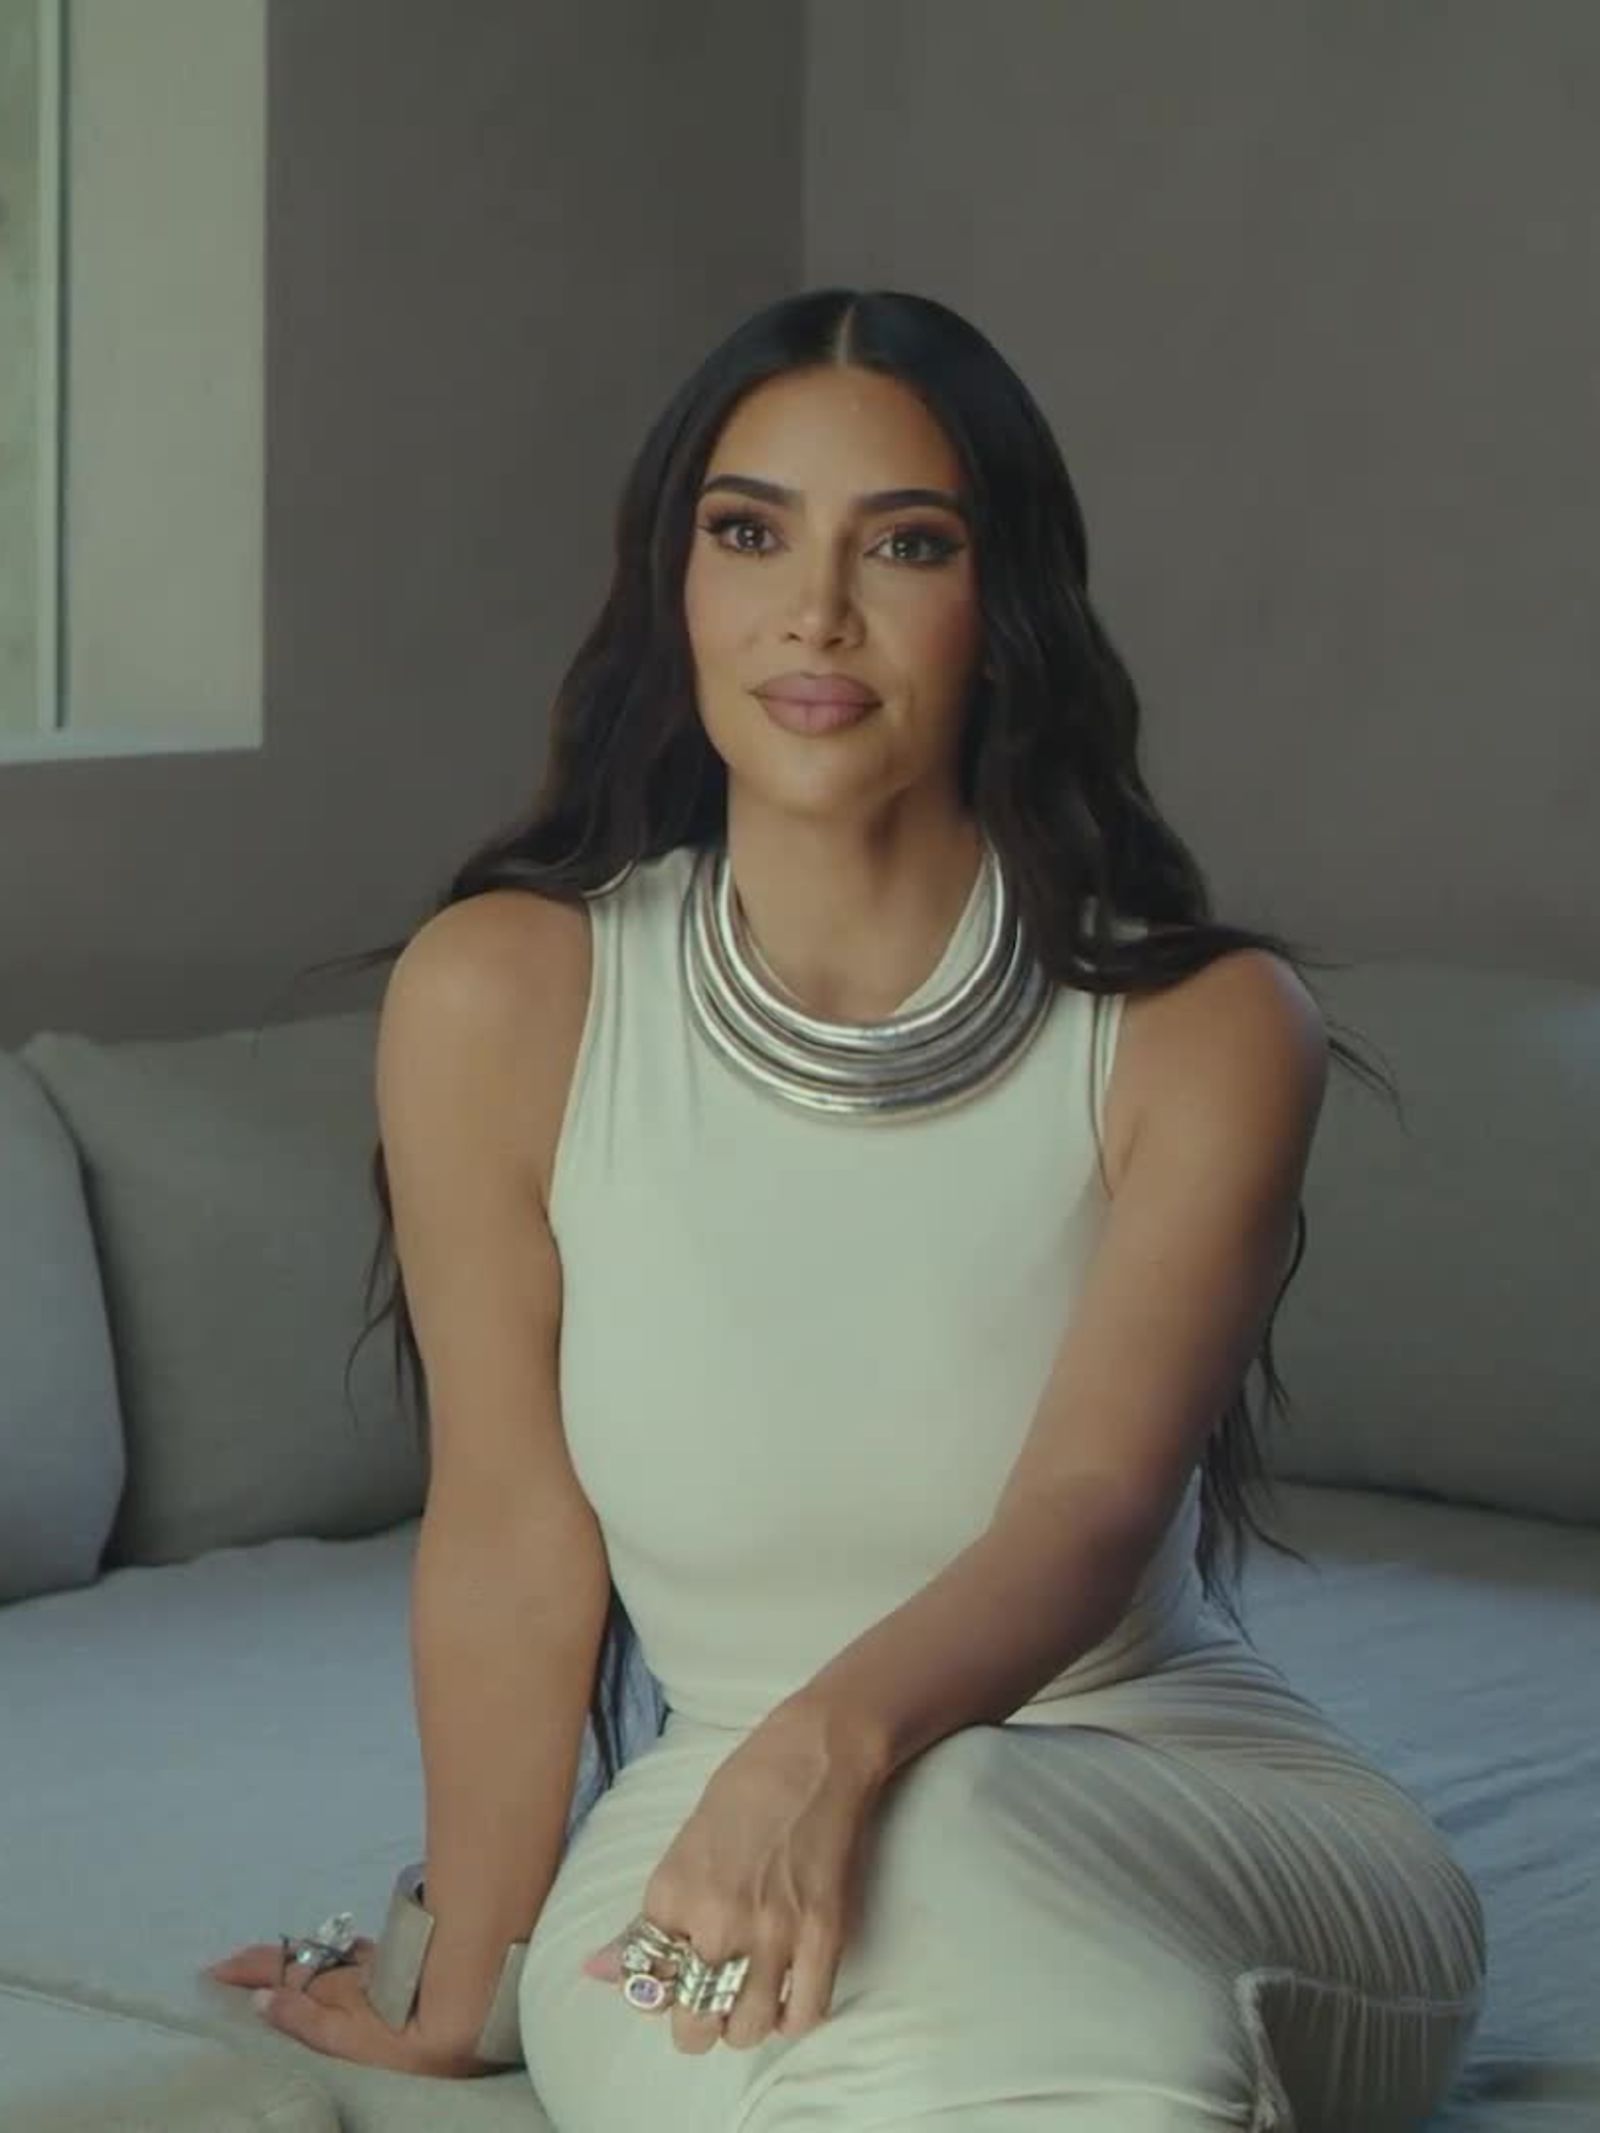 Kim Kardashian Adds Ambassador to Her Resume